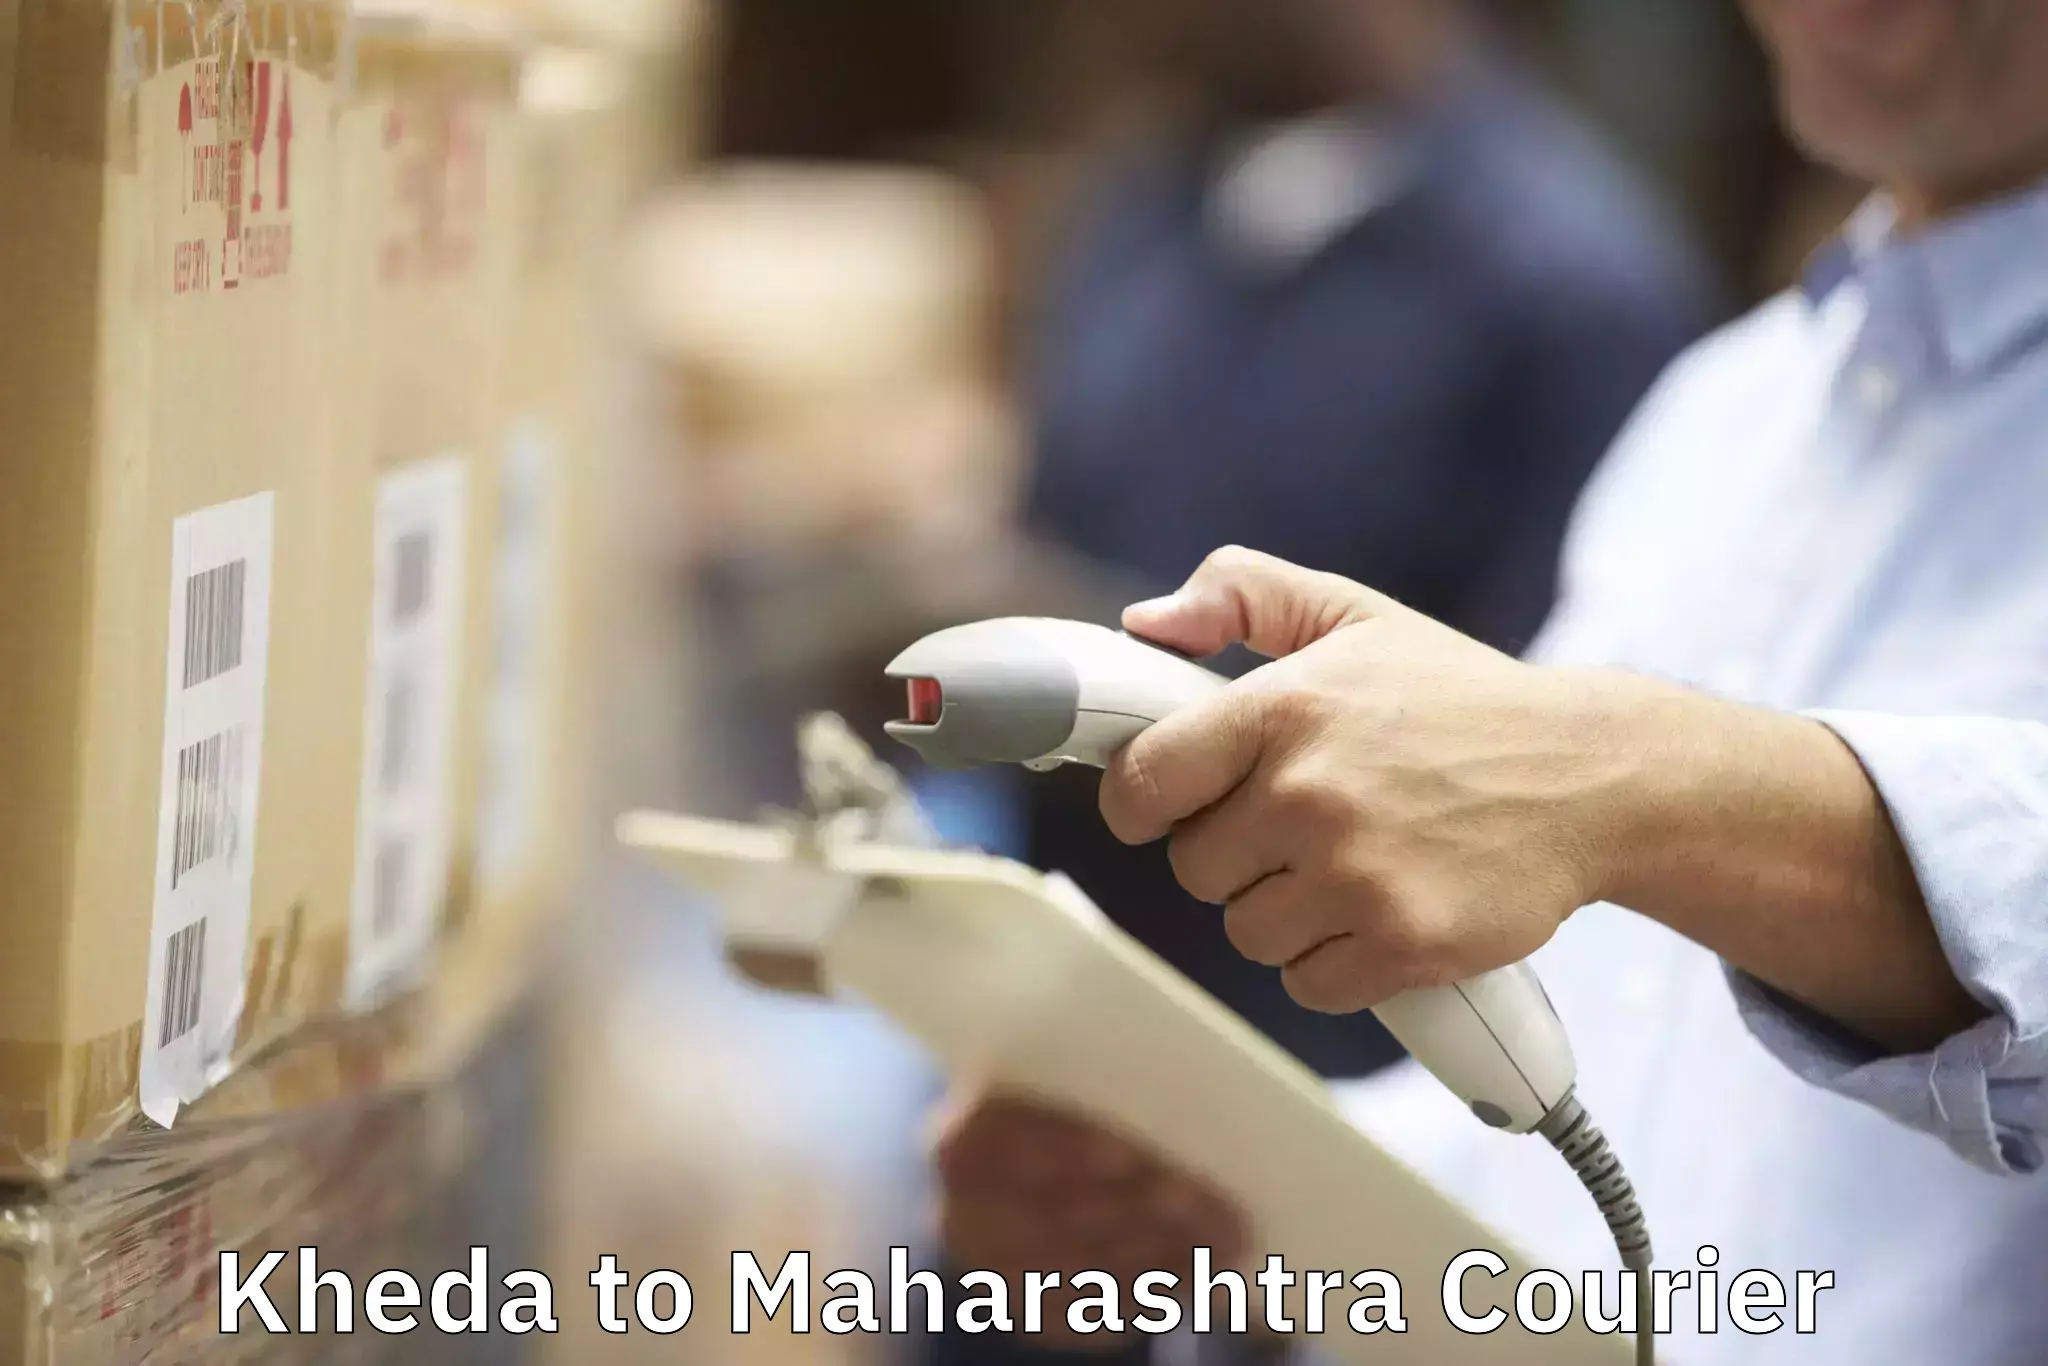 Quality moving company Kheda to Maharashtra